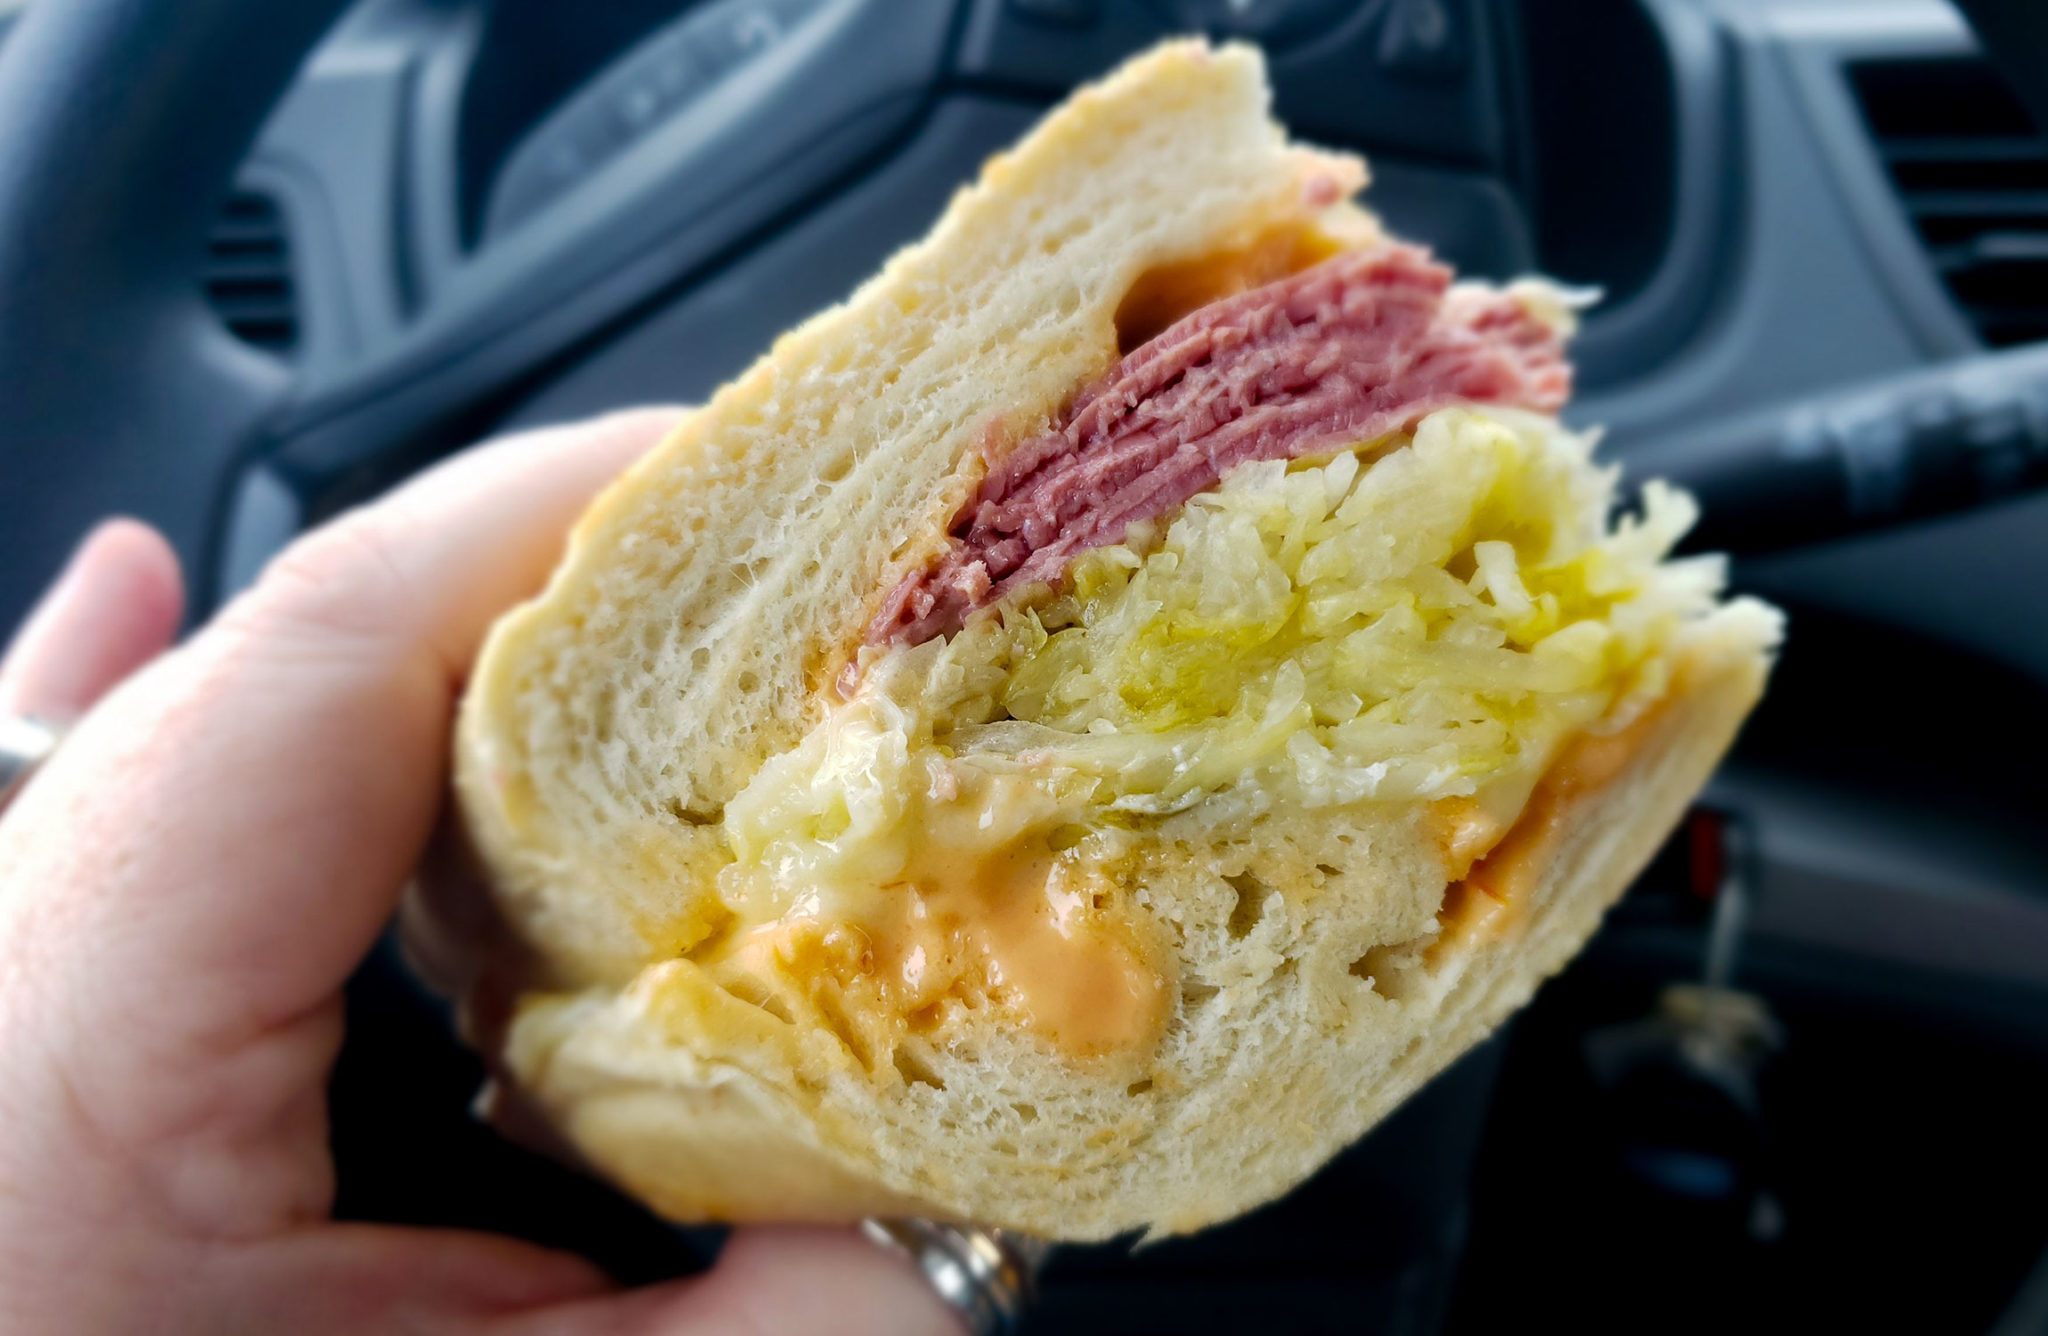 The Reuben Sandwich at Sonoma Sourdough Sandwiches. Heather Irwin/PD